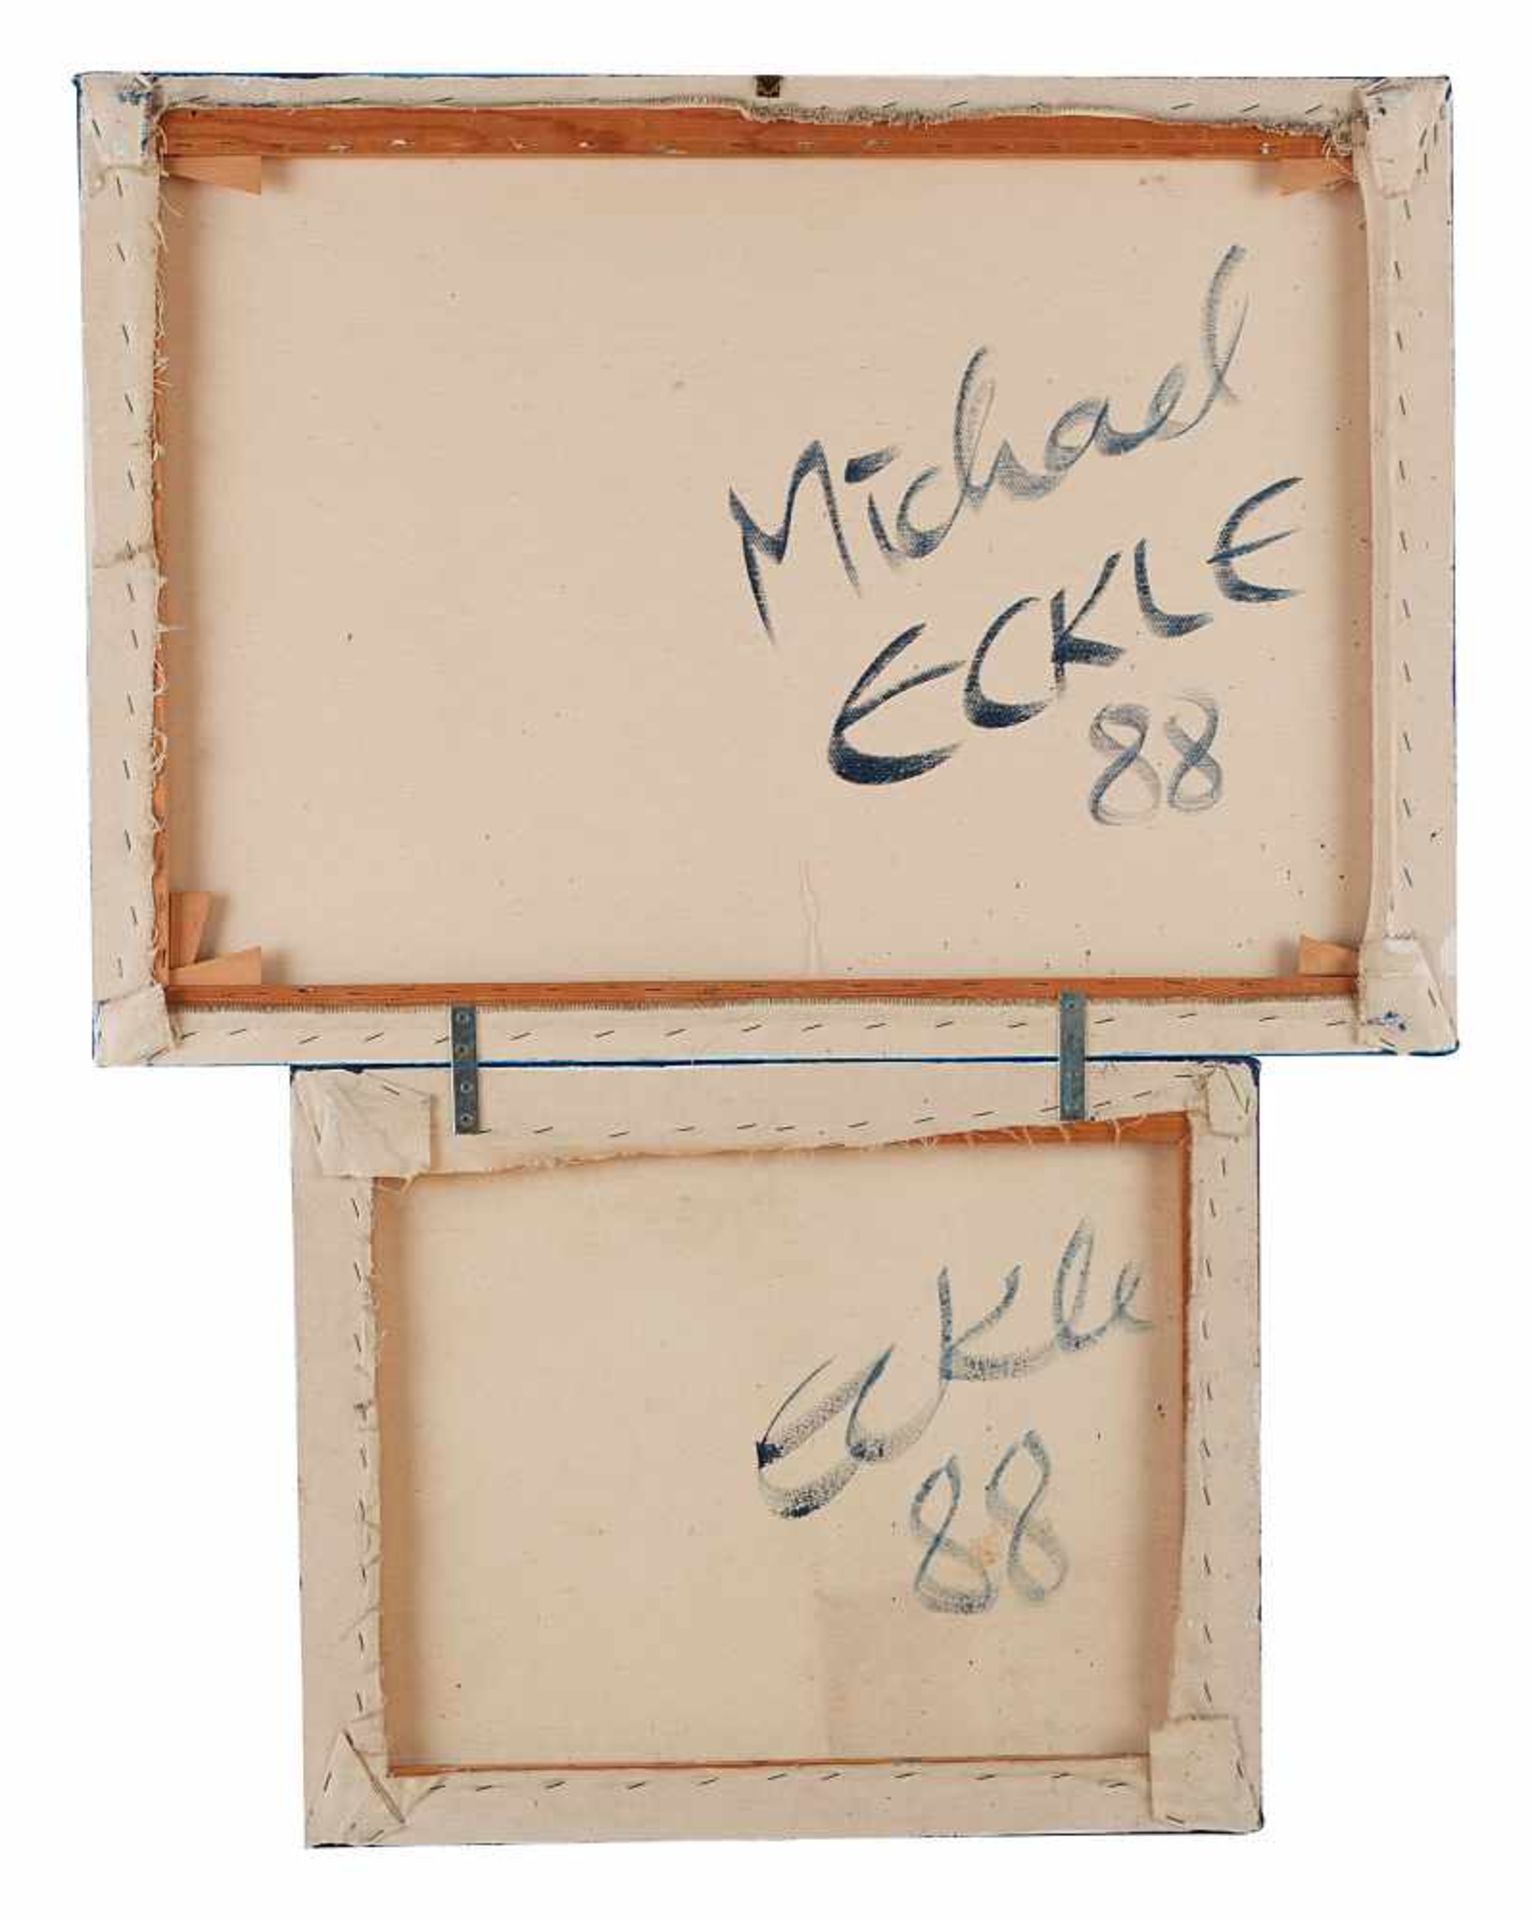 Eckle, Michael - Bild 2 aus 2